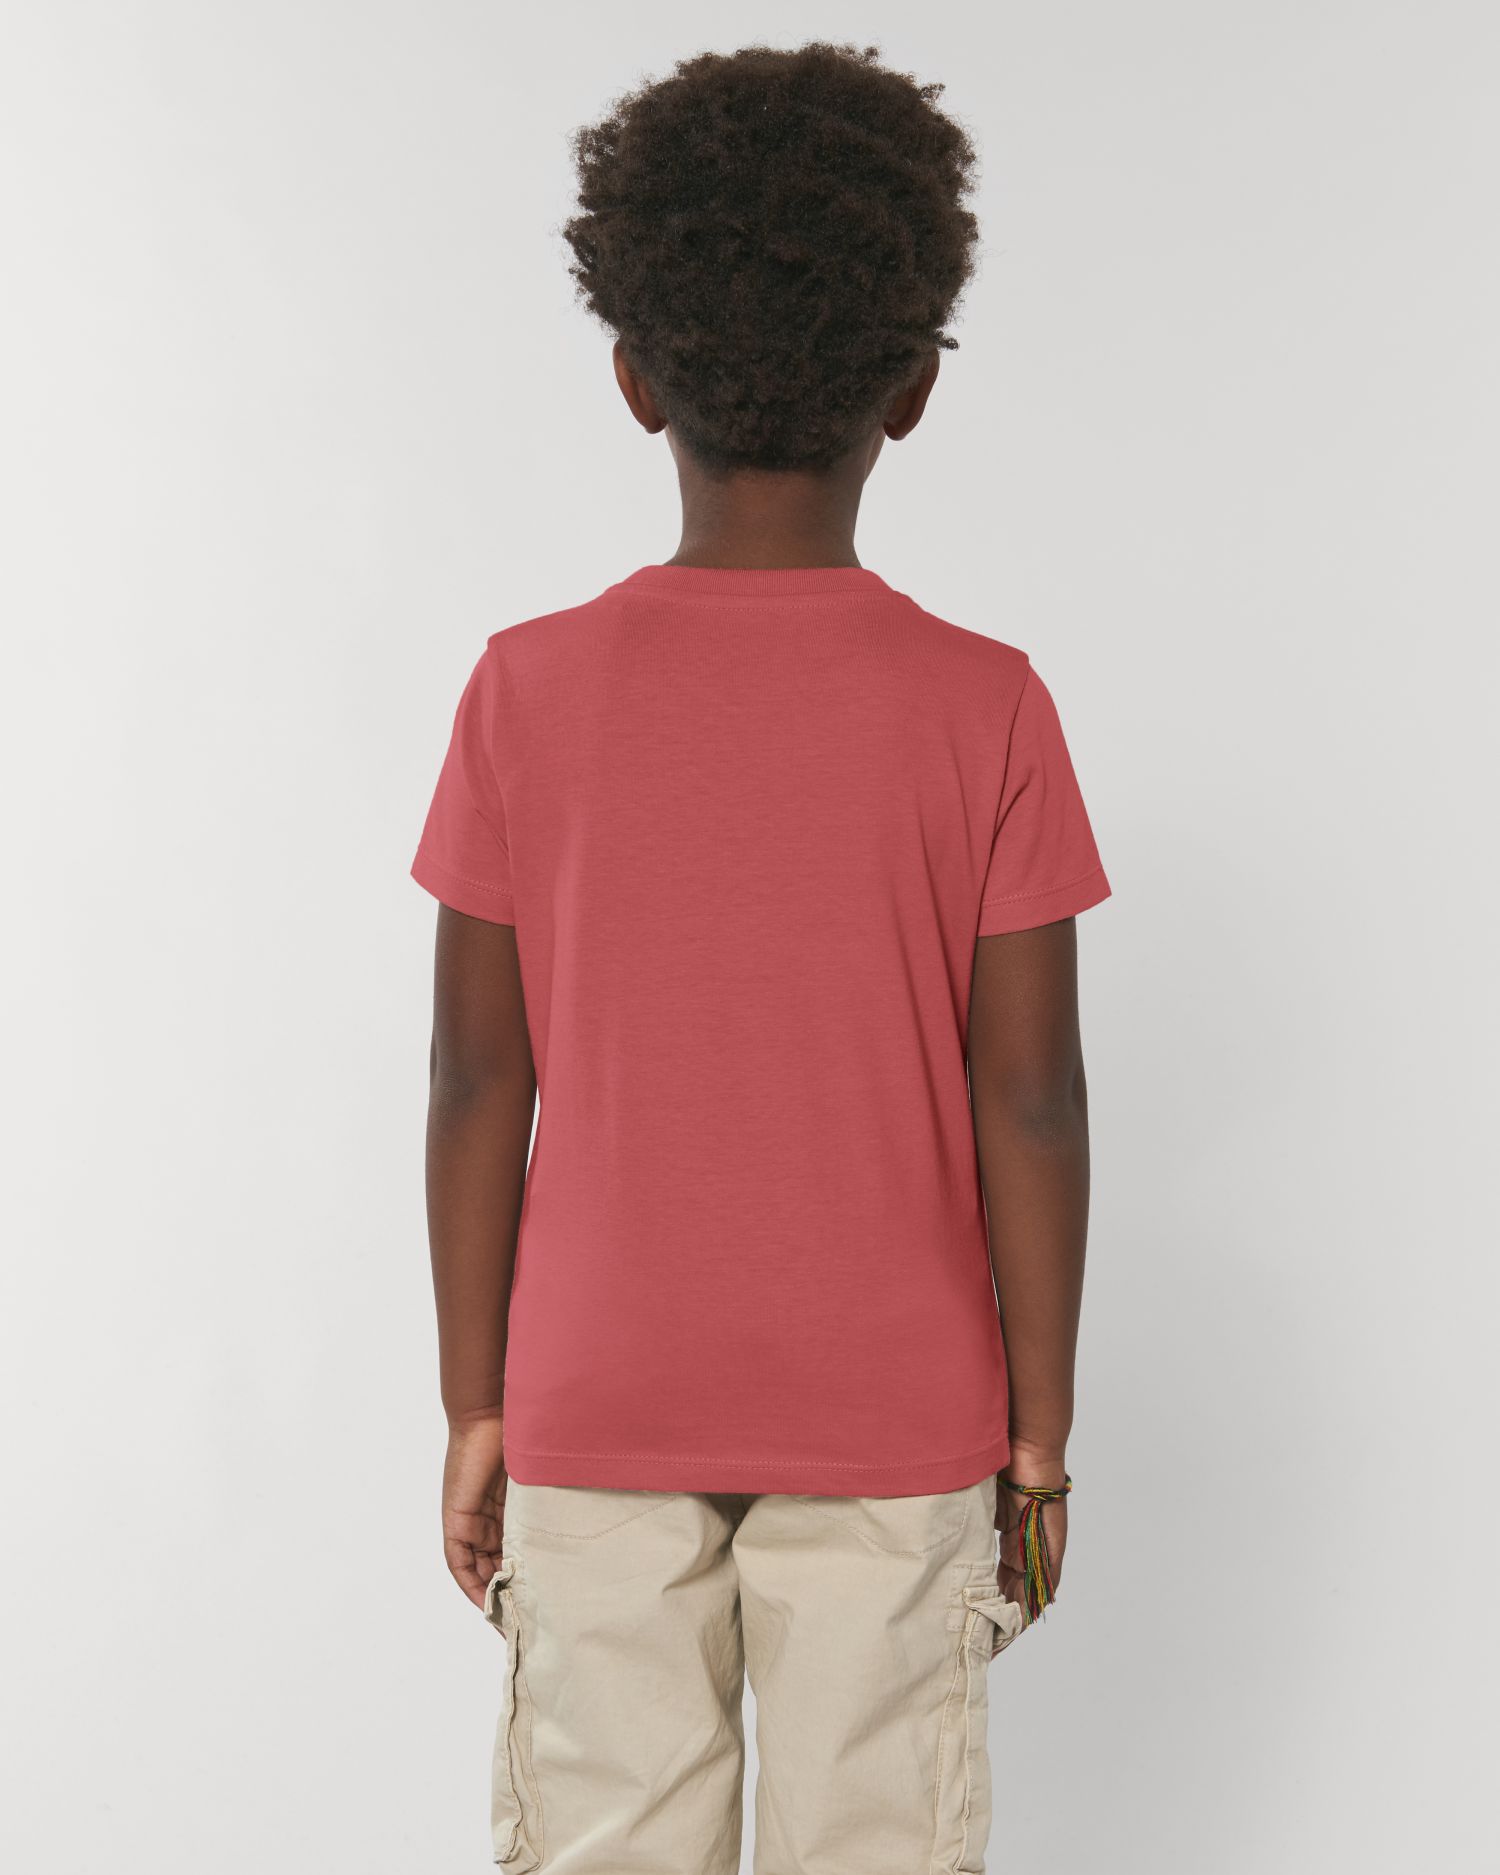 Kids T-Shirt Mini Creator in Farbe Carmine Red